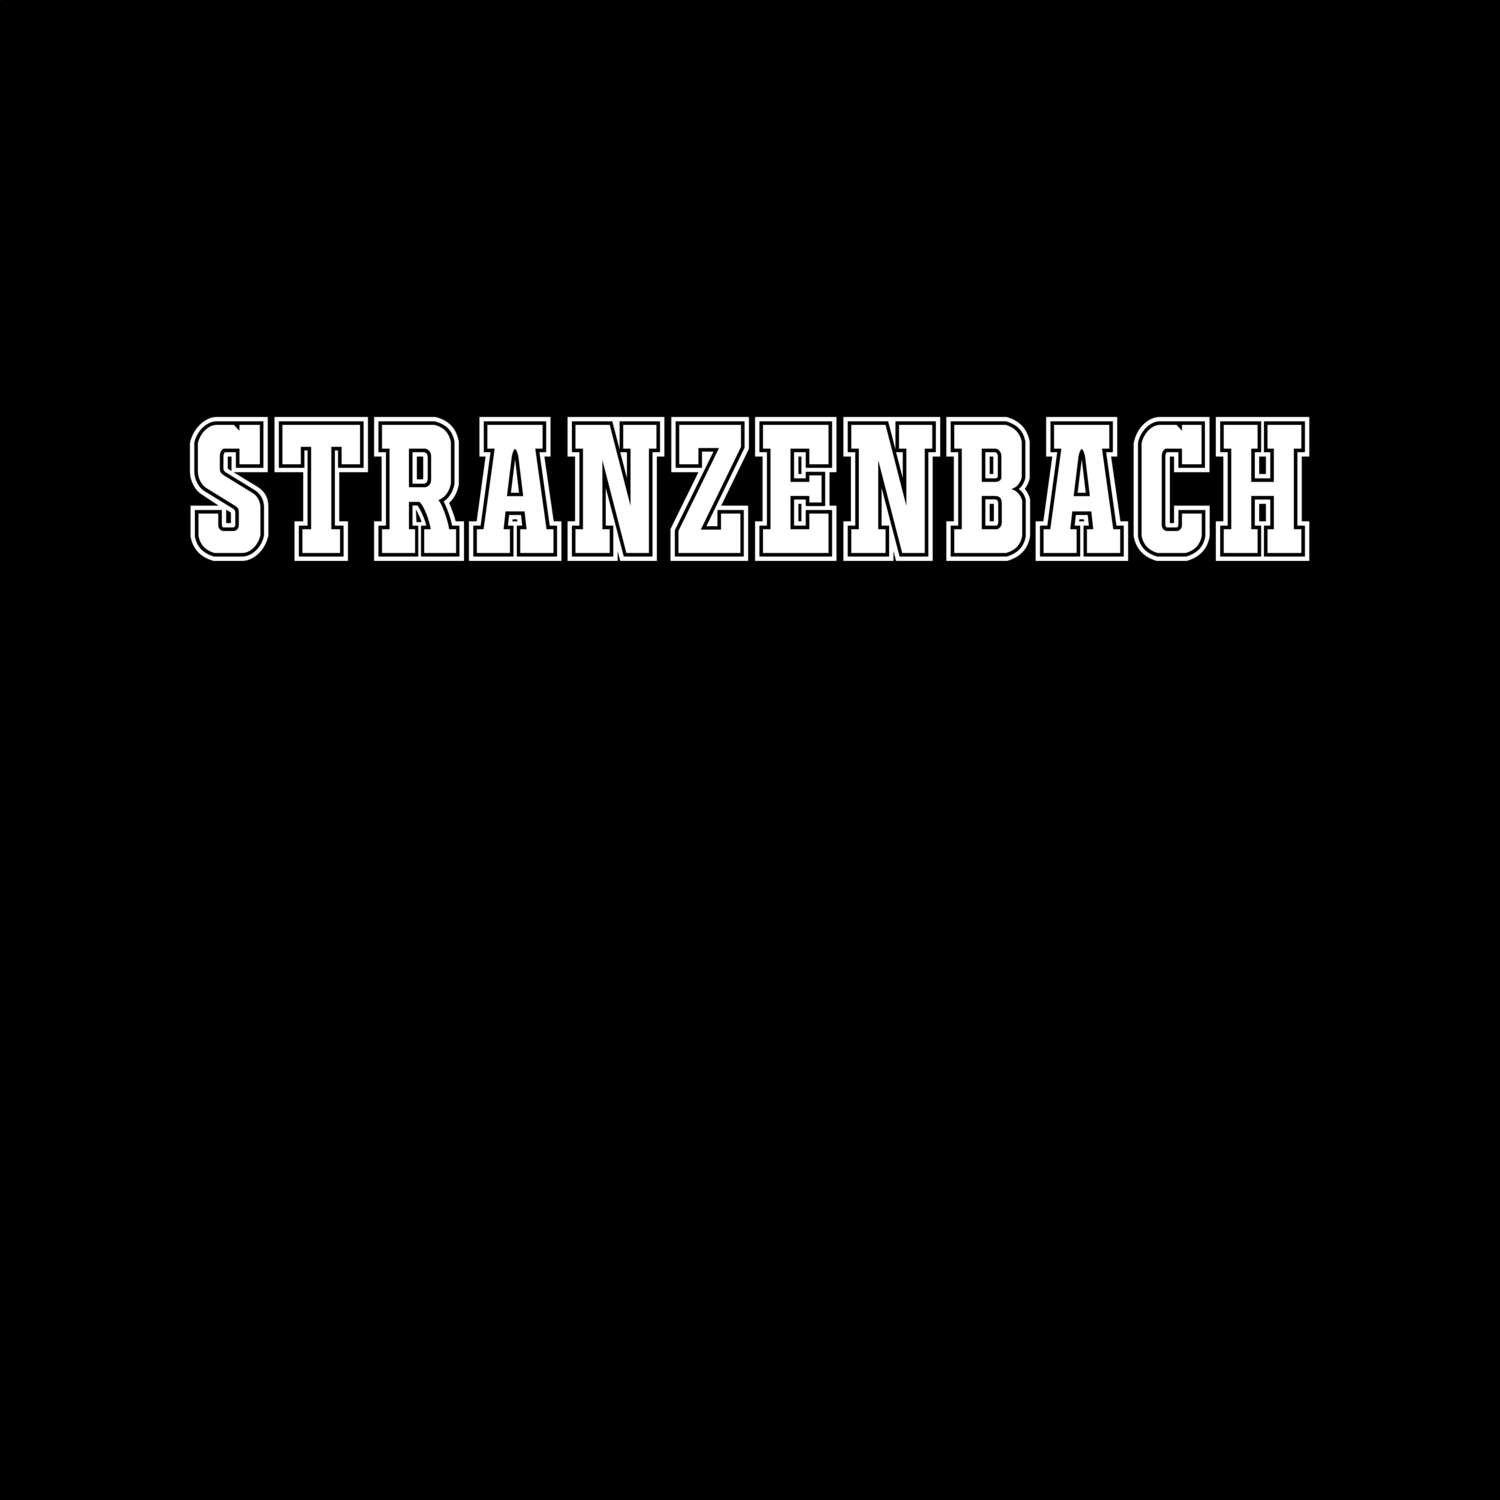 Stranzenbach T-Shirt »Classic«